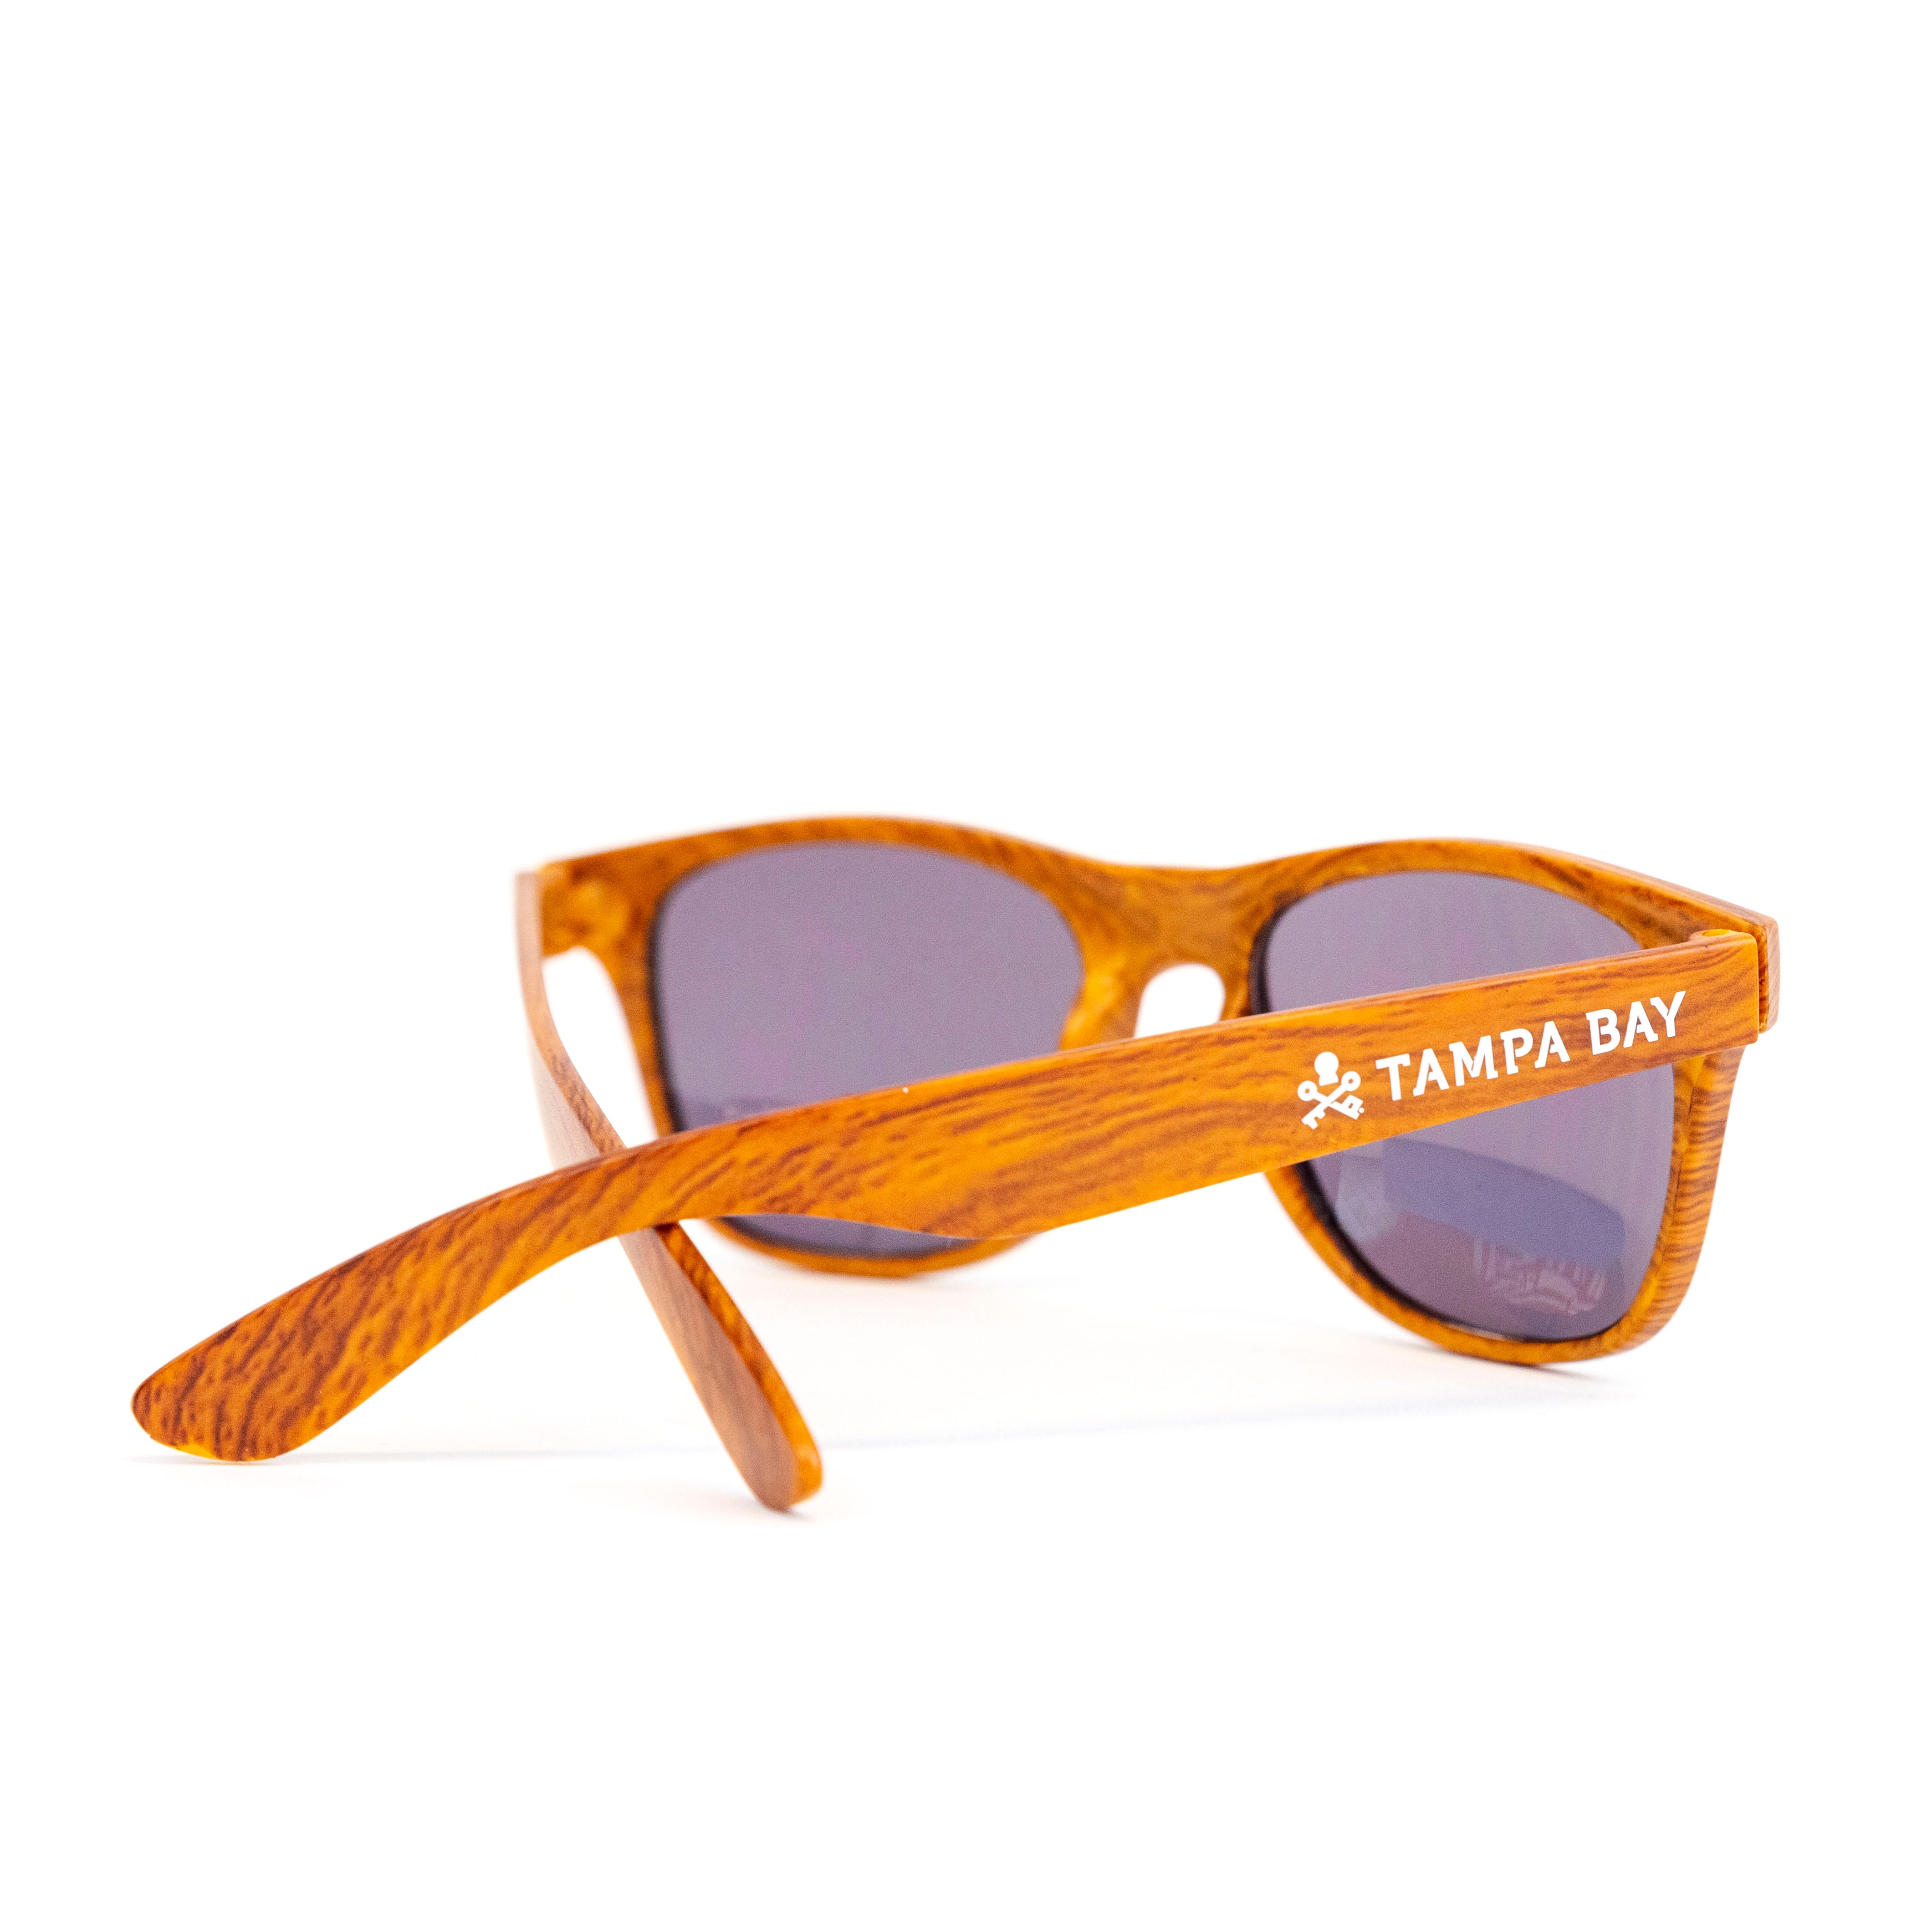 Tampa Bay Wood Finish Sunglasses